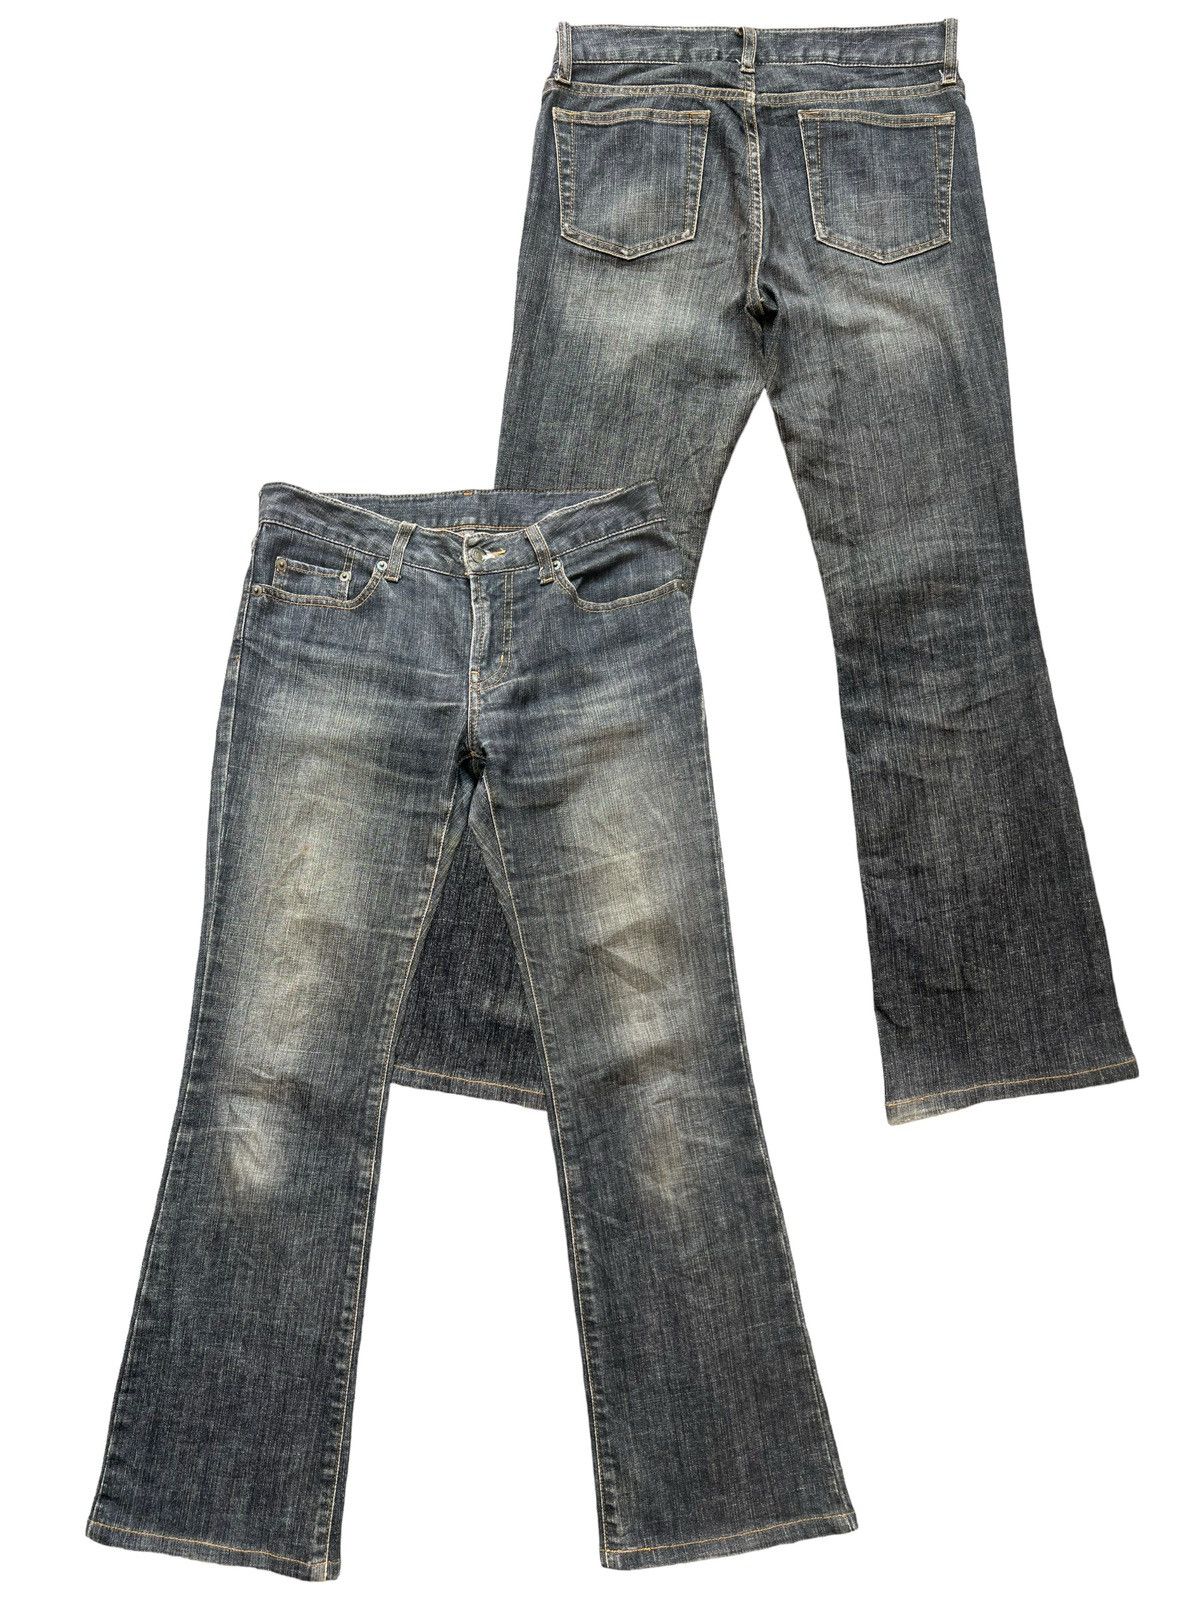 Uniqlo Black Low Rise Bootcut Flare Denim Jeans 30x29 - 1